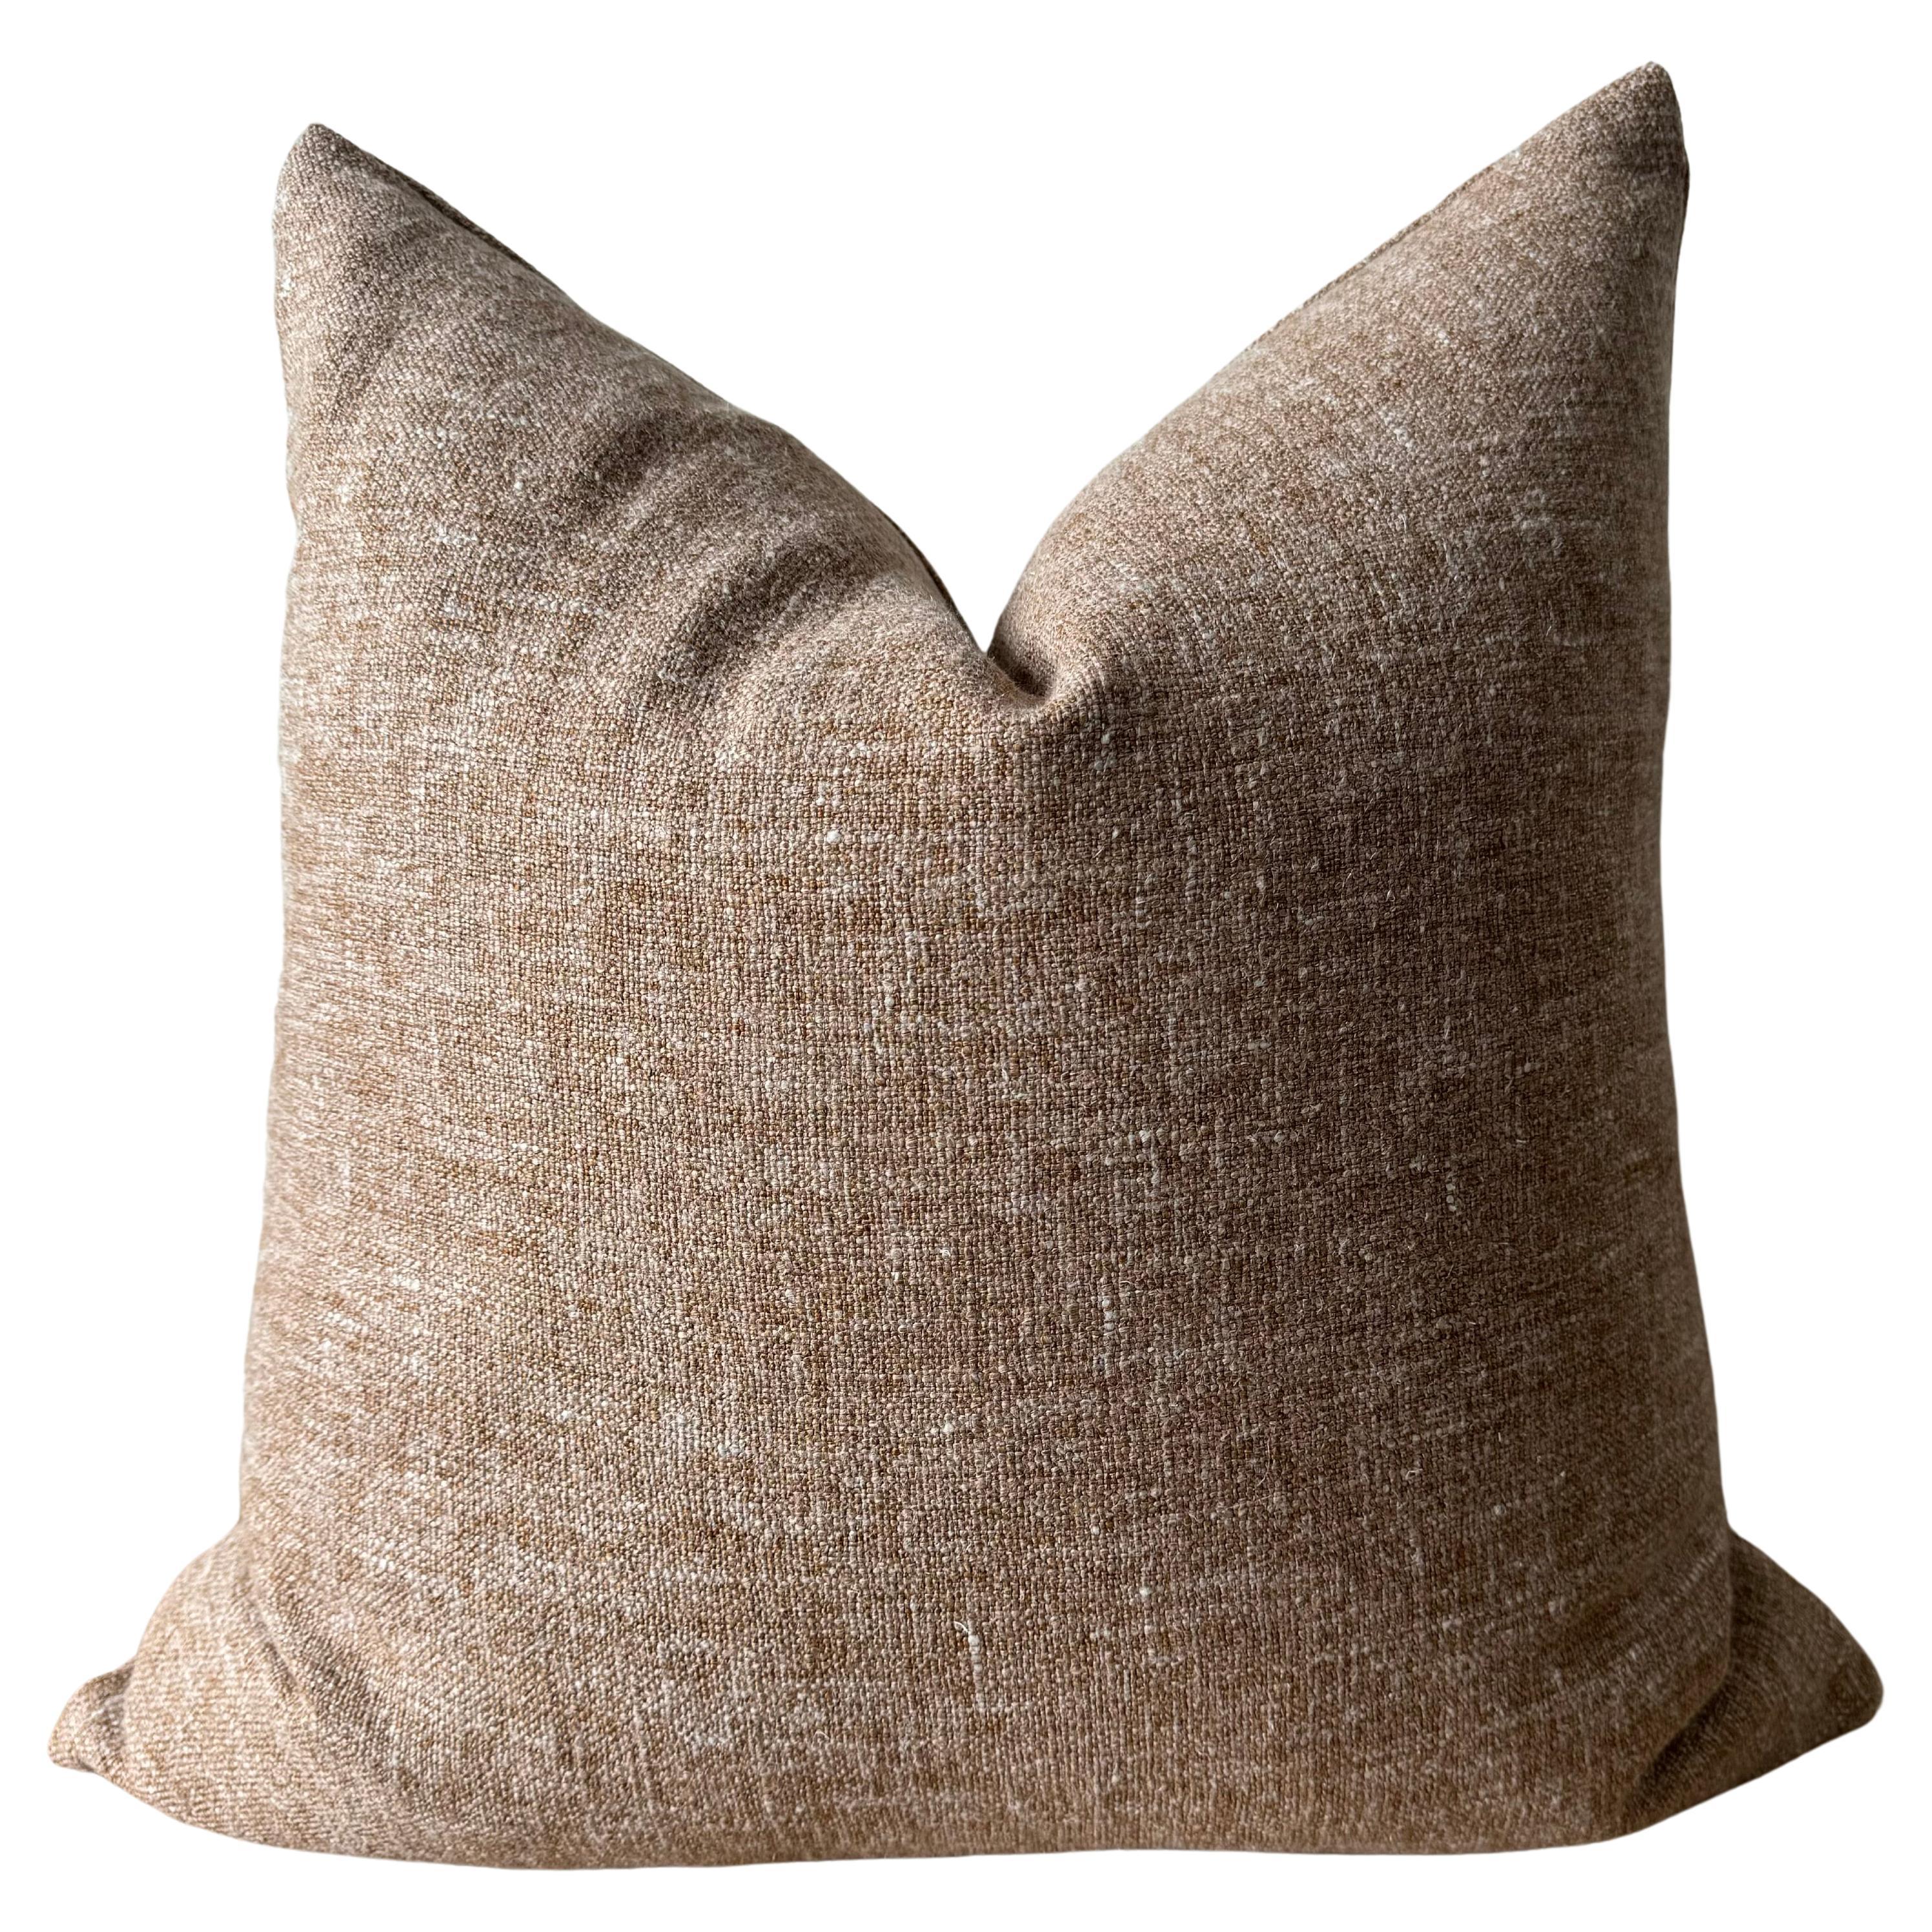 Custom Heavy Textured Linen Pillow in Bejmat Brown with Down Insert